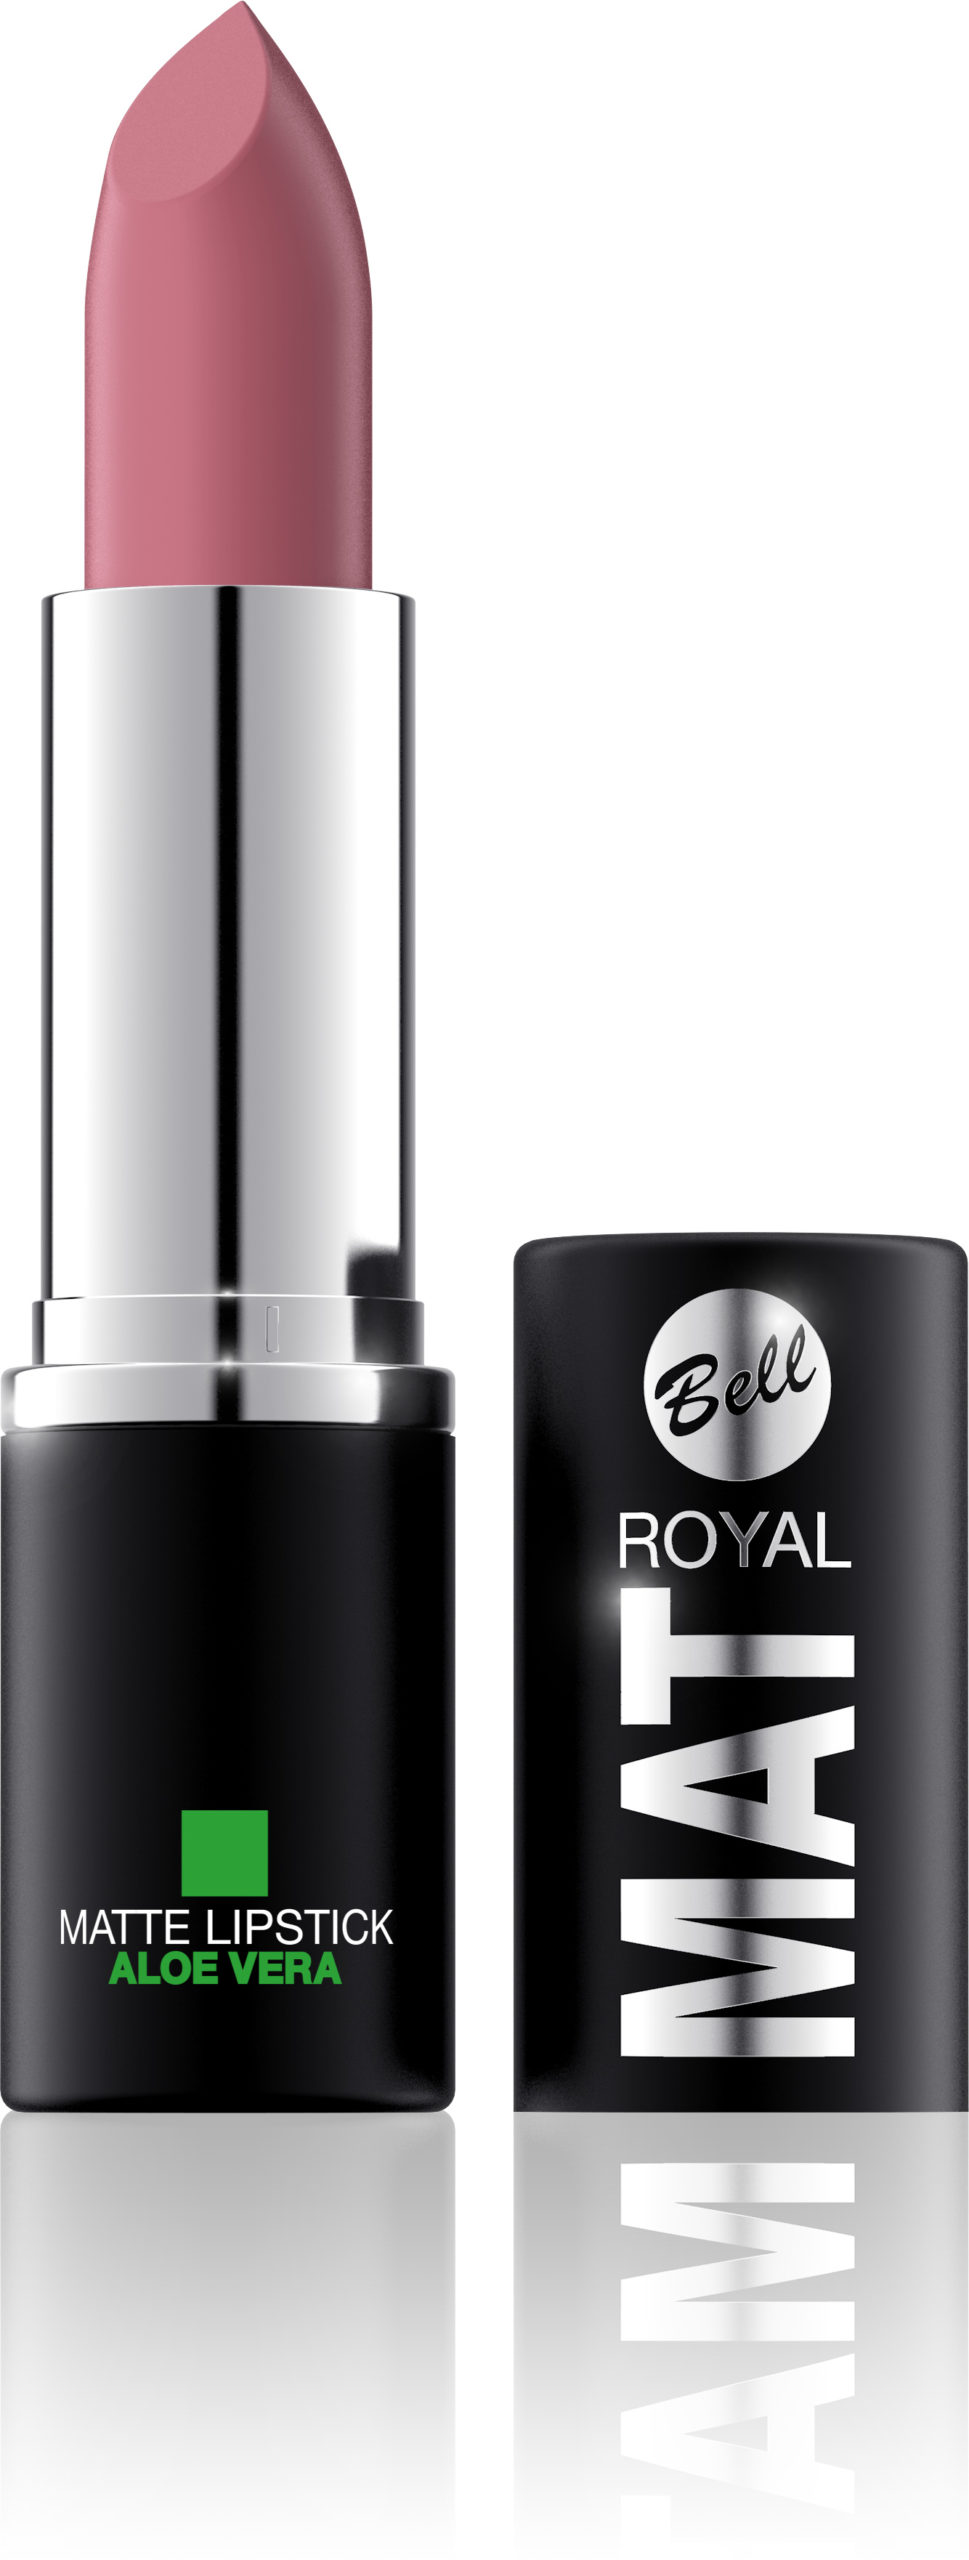 Royal Mat lipstick